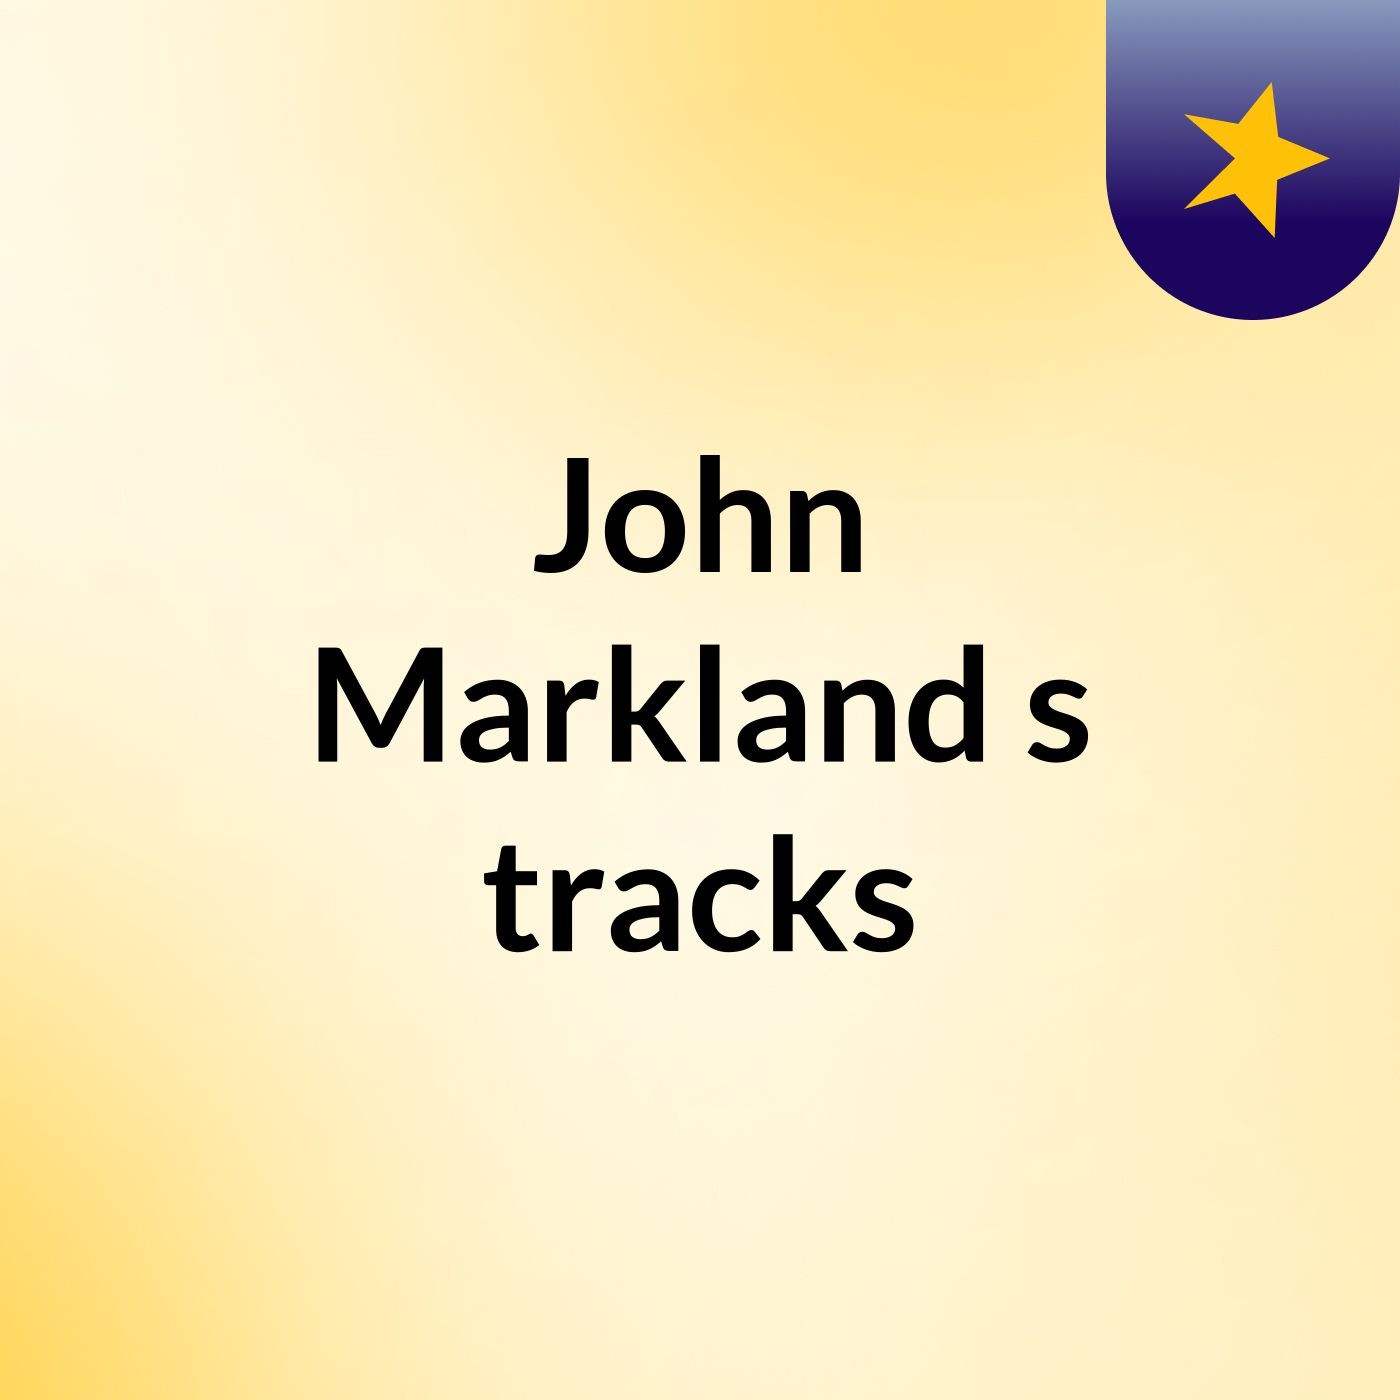 John Markland's tracks